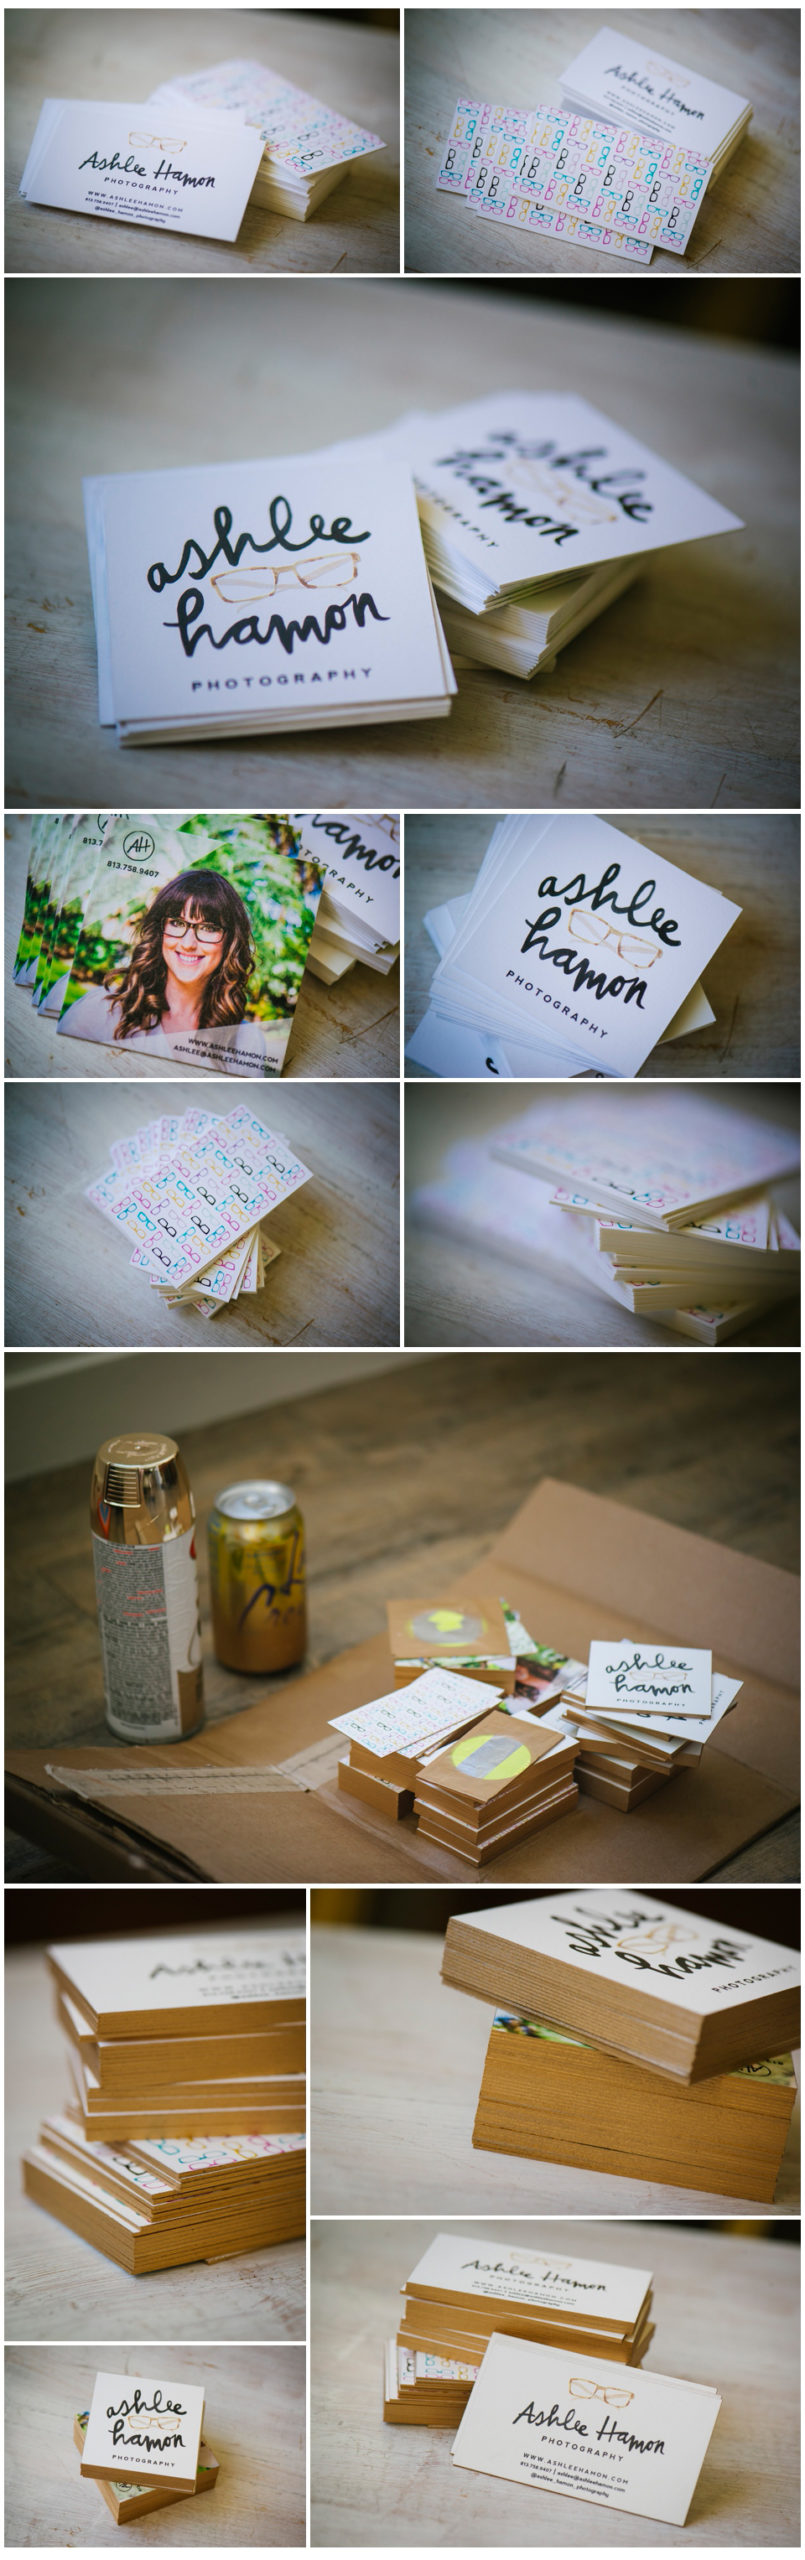 Ashlee-Hamon-Photography-Business-Cards.jpg